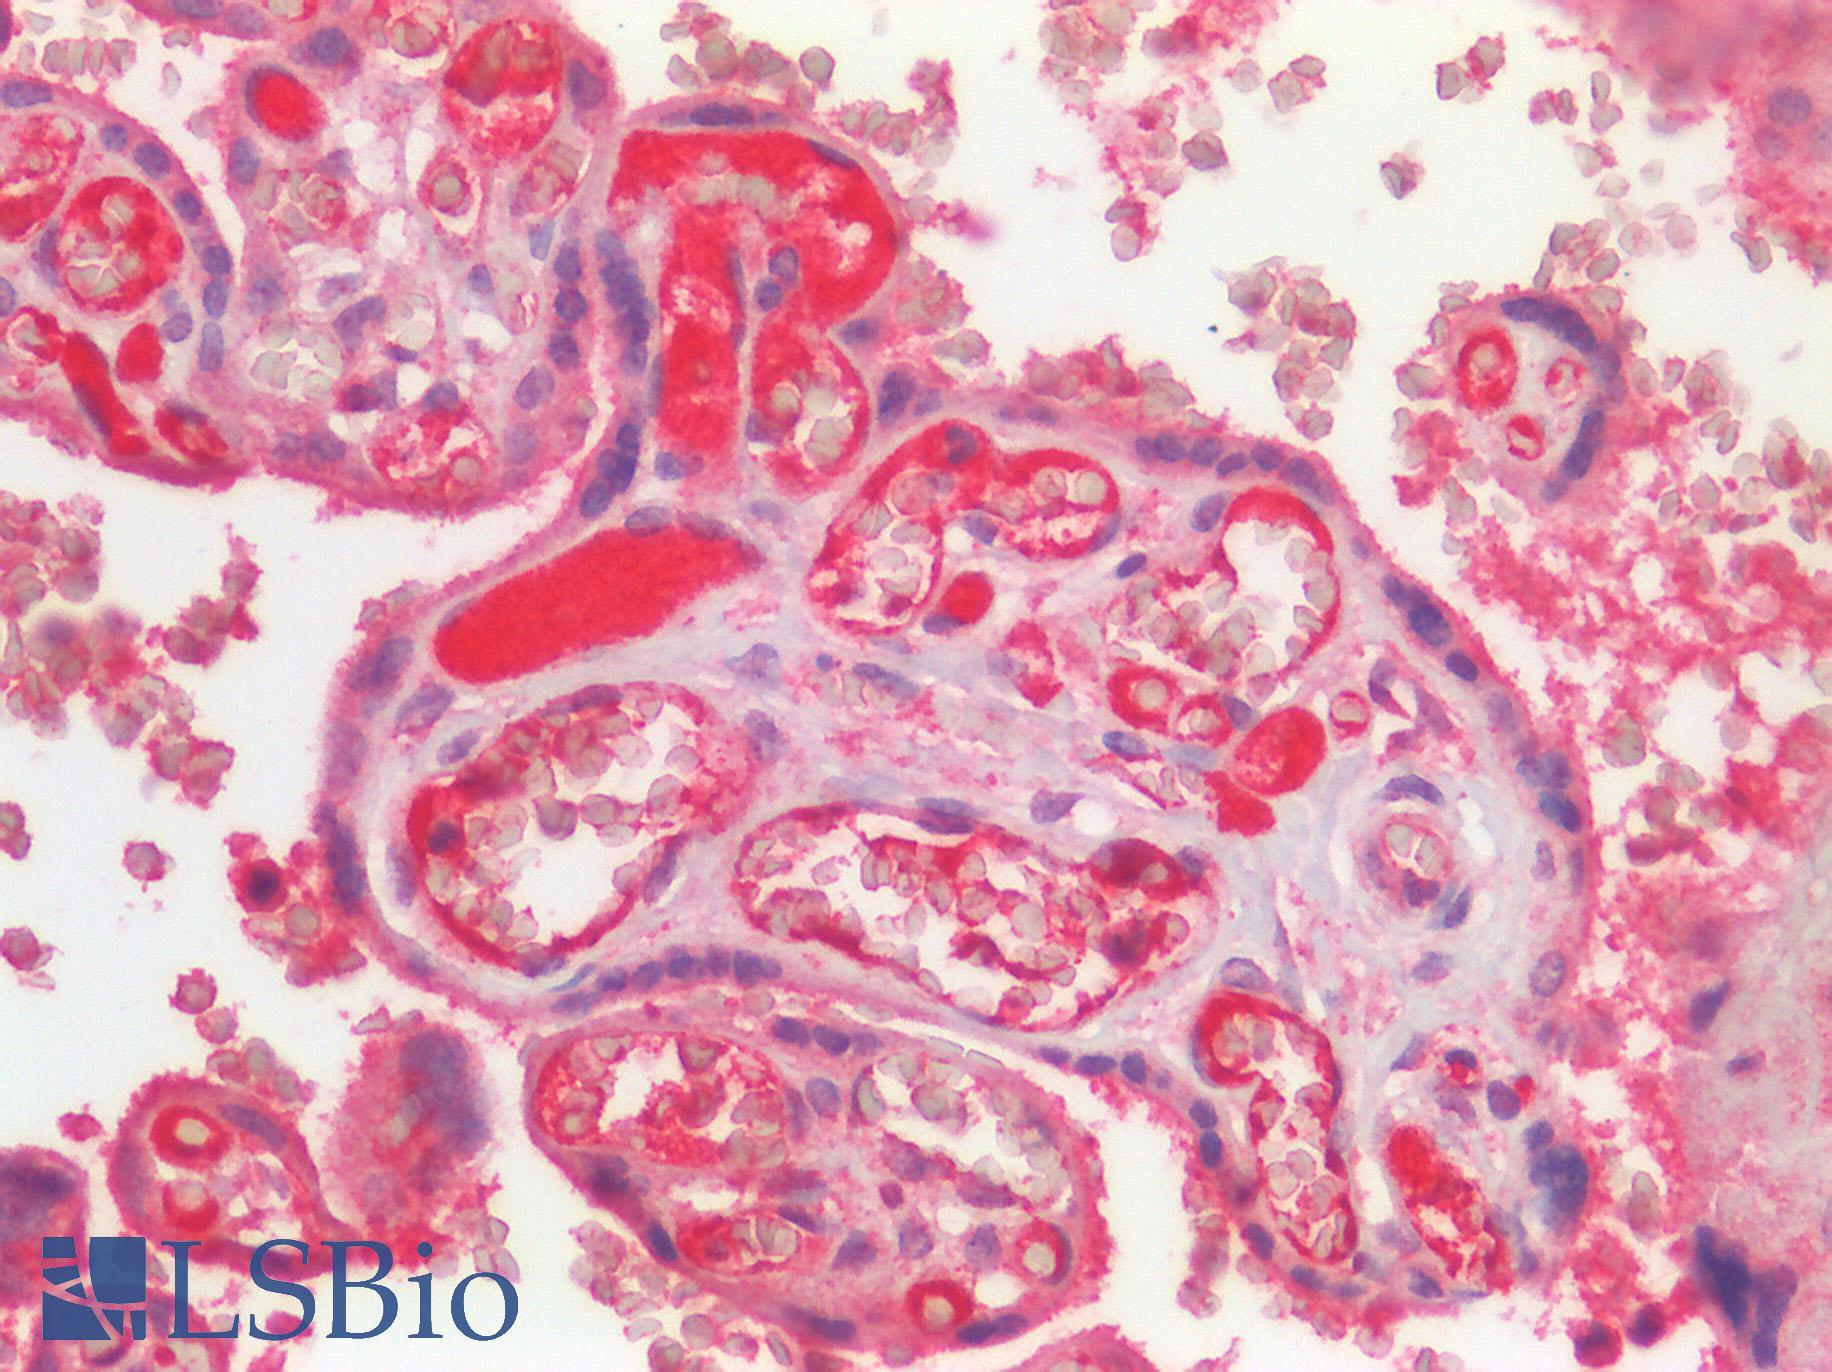 GPR49 / LGR5 Antibody - Human Placenta: Formalin-Fixed, Paraffin-Embedded (FFPE)